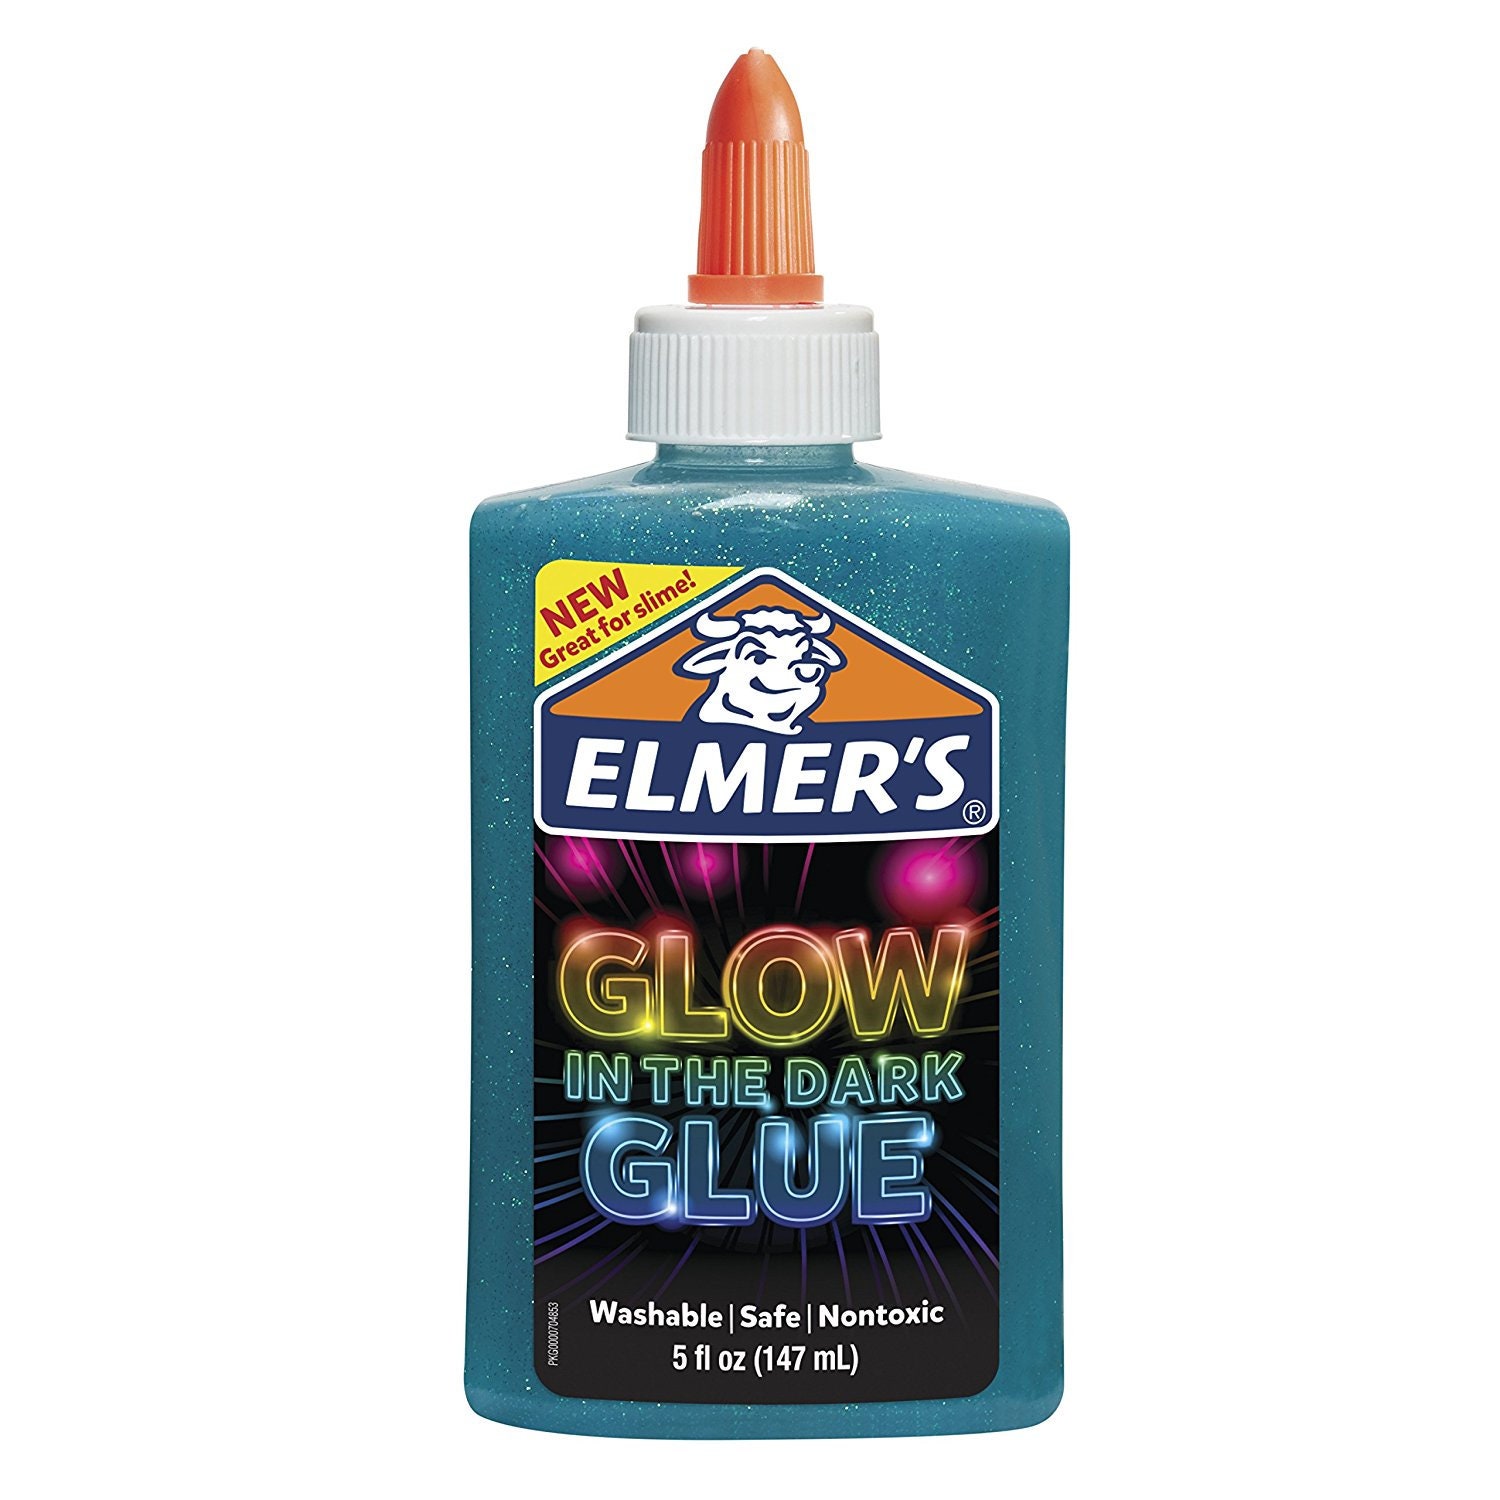 Aleene's Tacky Glue-mini Bottle-felt Glue-crafting Glue-white  Glue-adhesive-strong Glue-tacky Glue-gold Bottle Glue 